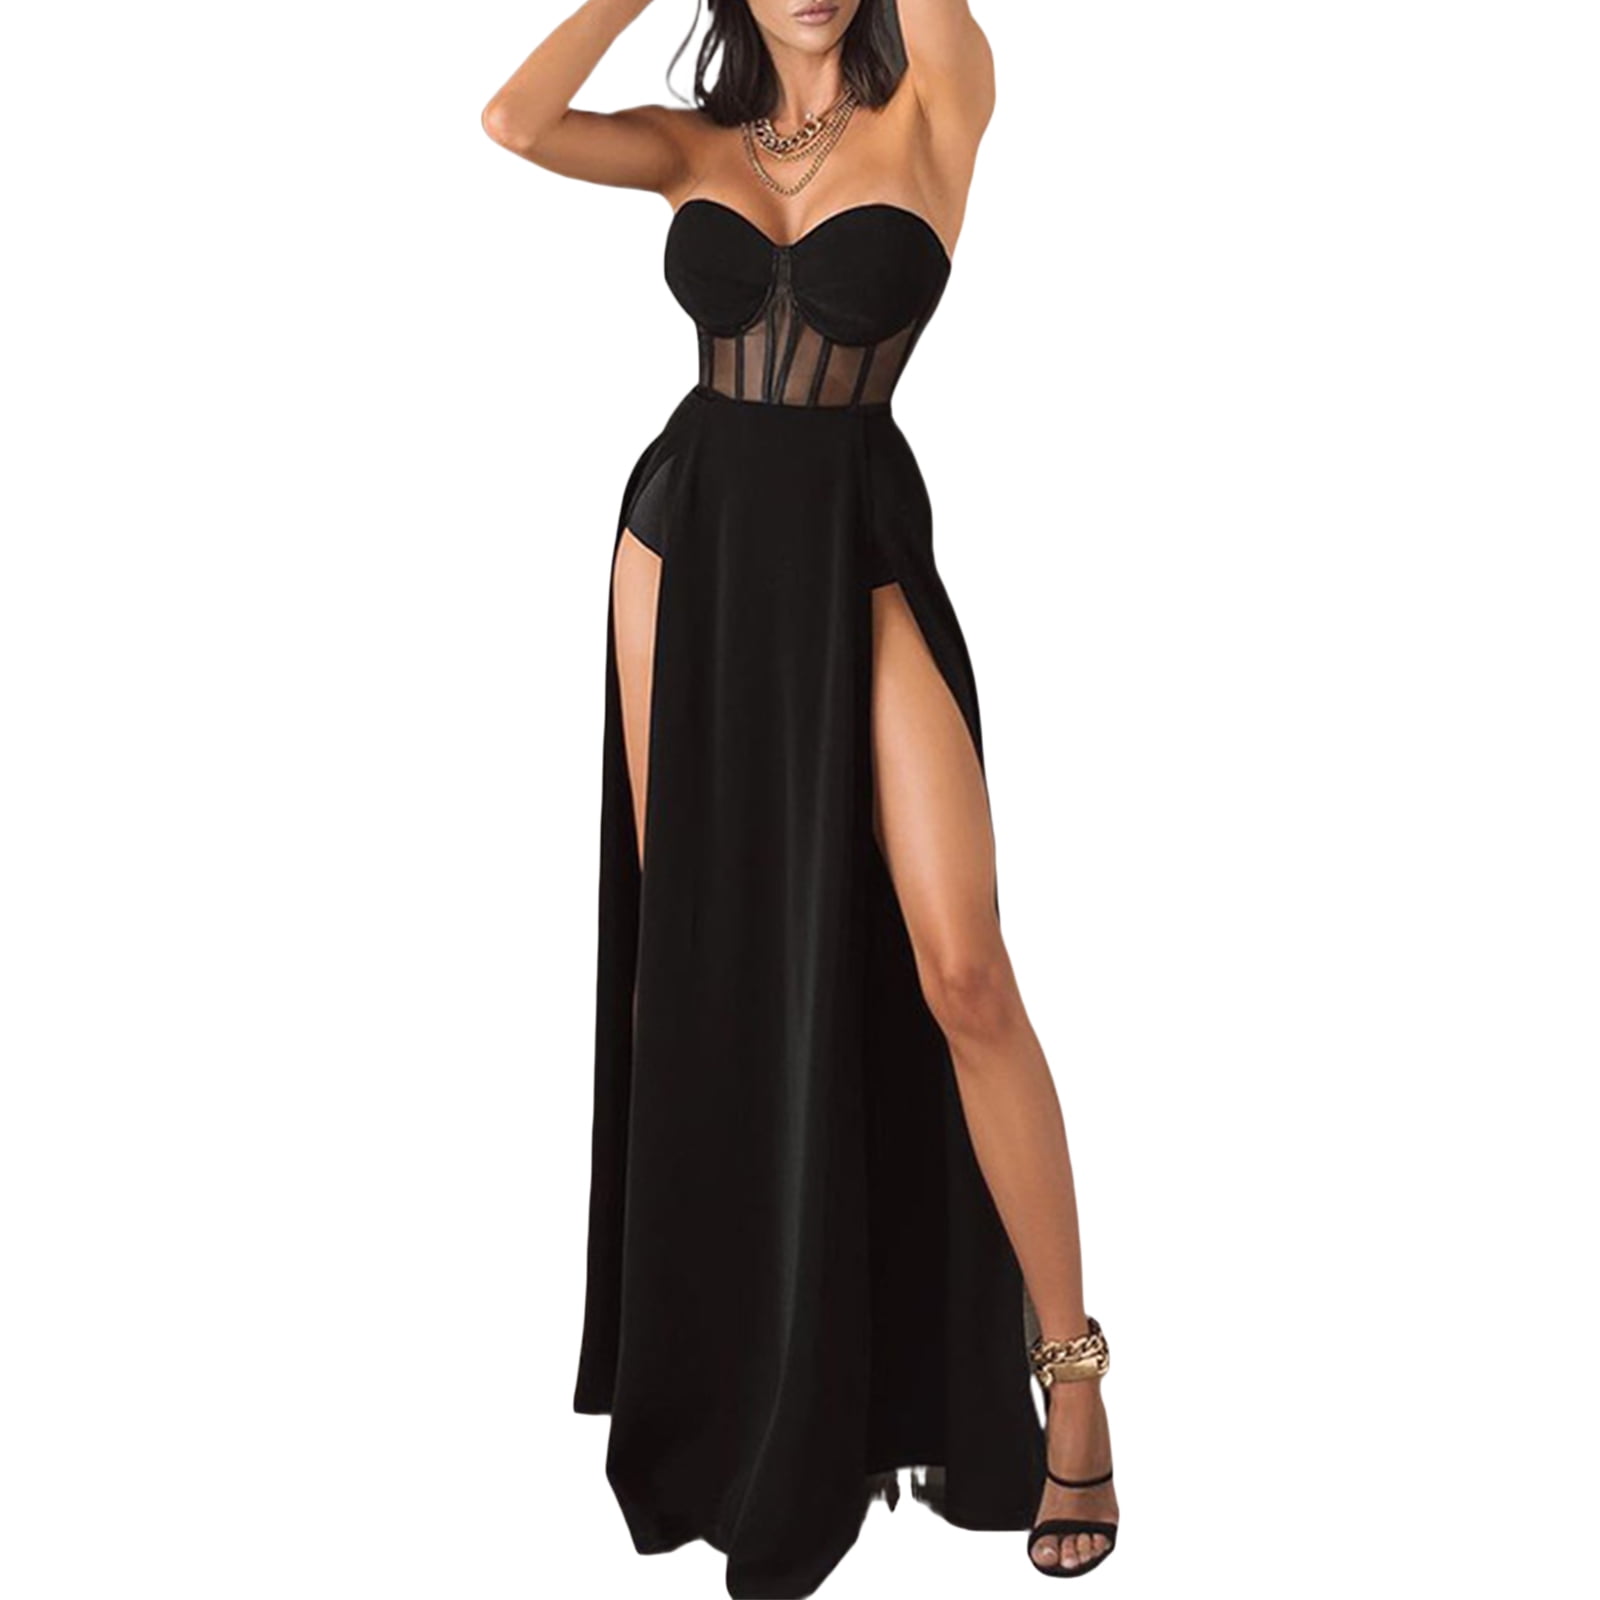 Women Tube Top Dress Sexy Bodysuit Dress High Waist Slit See Through Black  Cocktail Party Gown Long Dress 